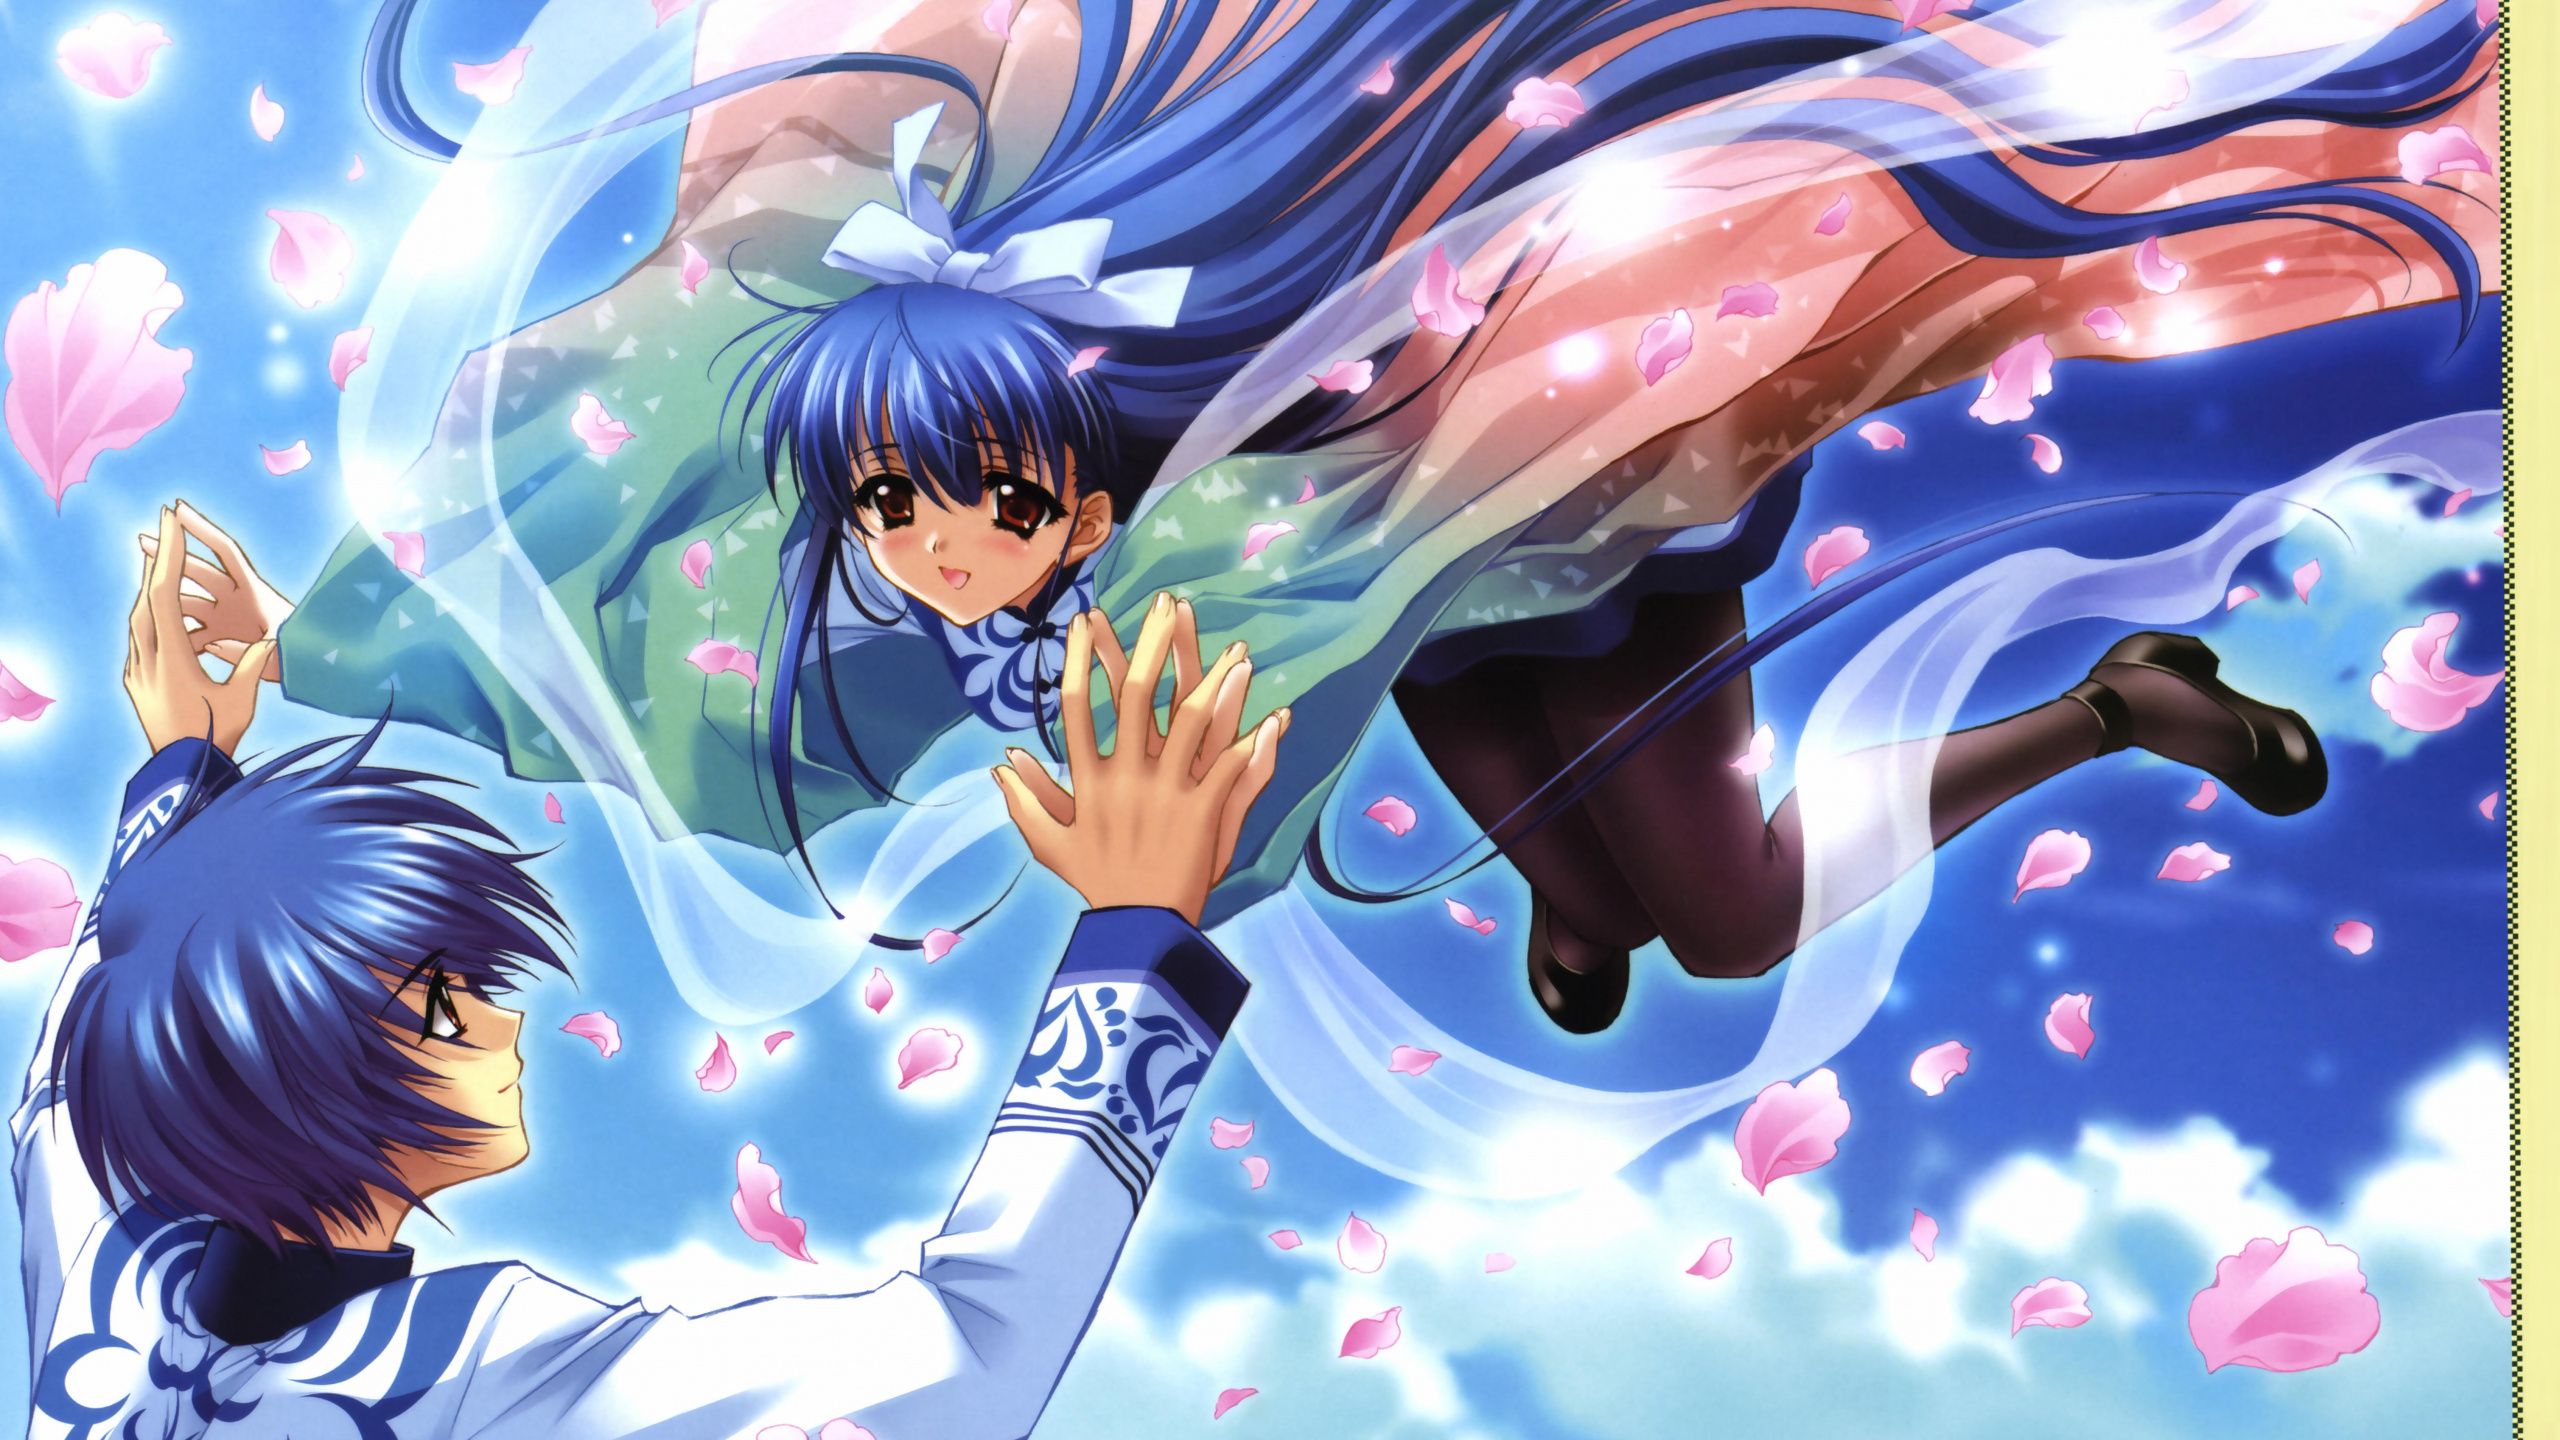 Personaje de Anime Masculino de Pelo Azul. Wallpaper in 2560x1440 Resolution